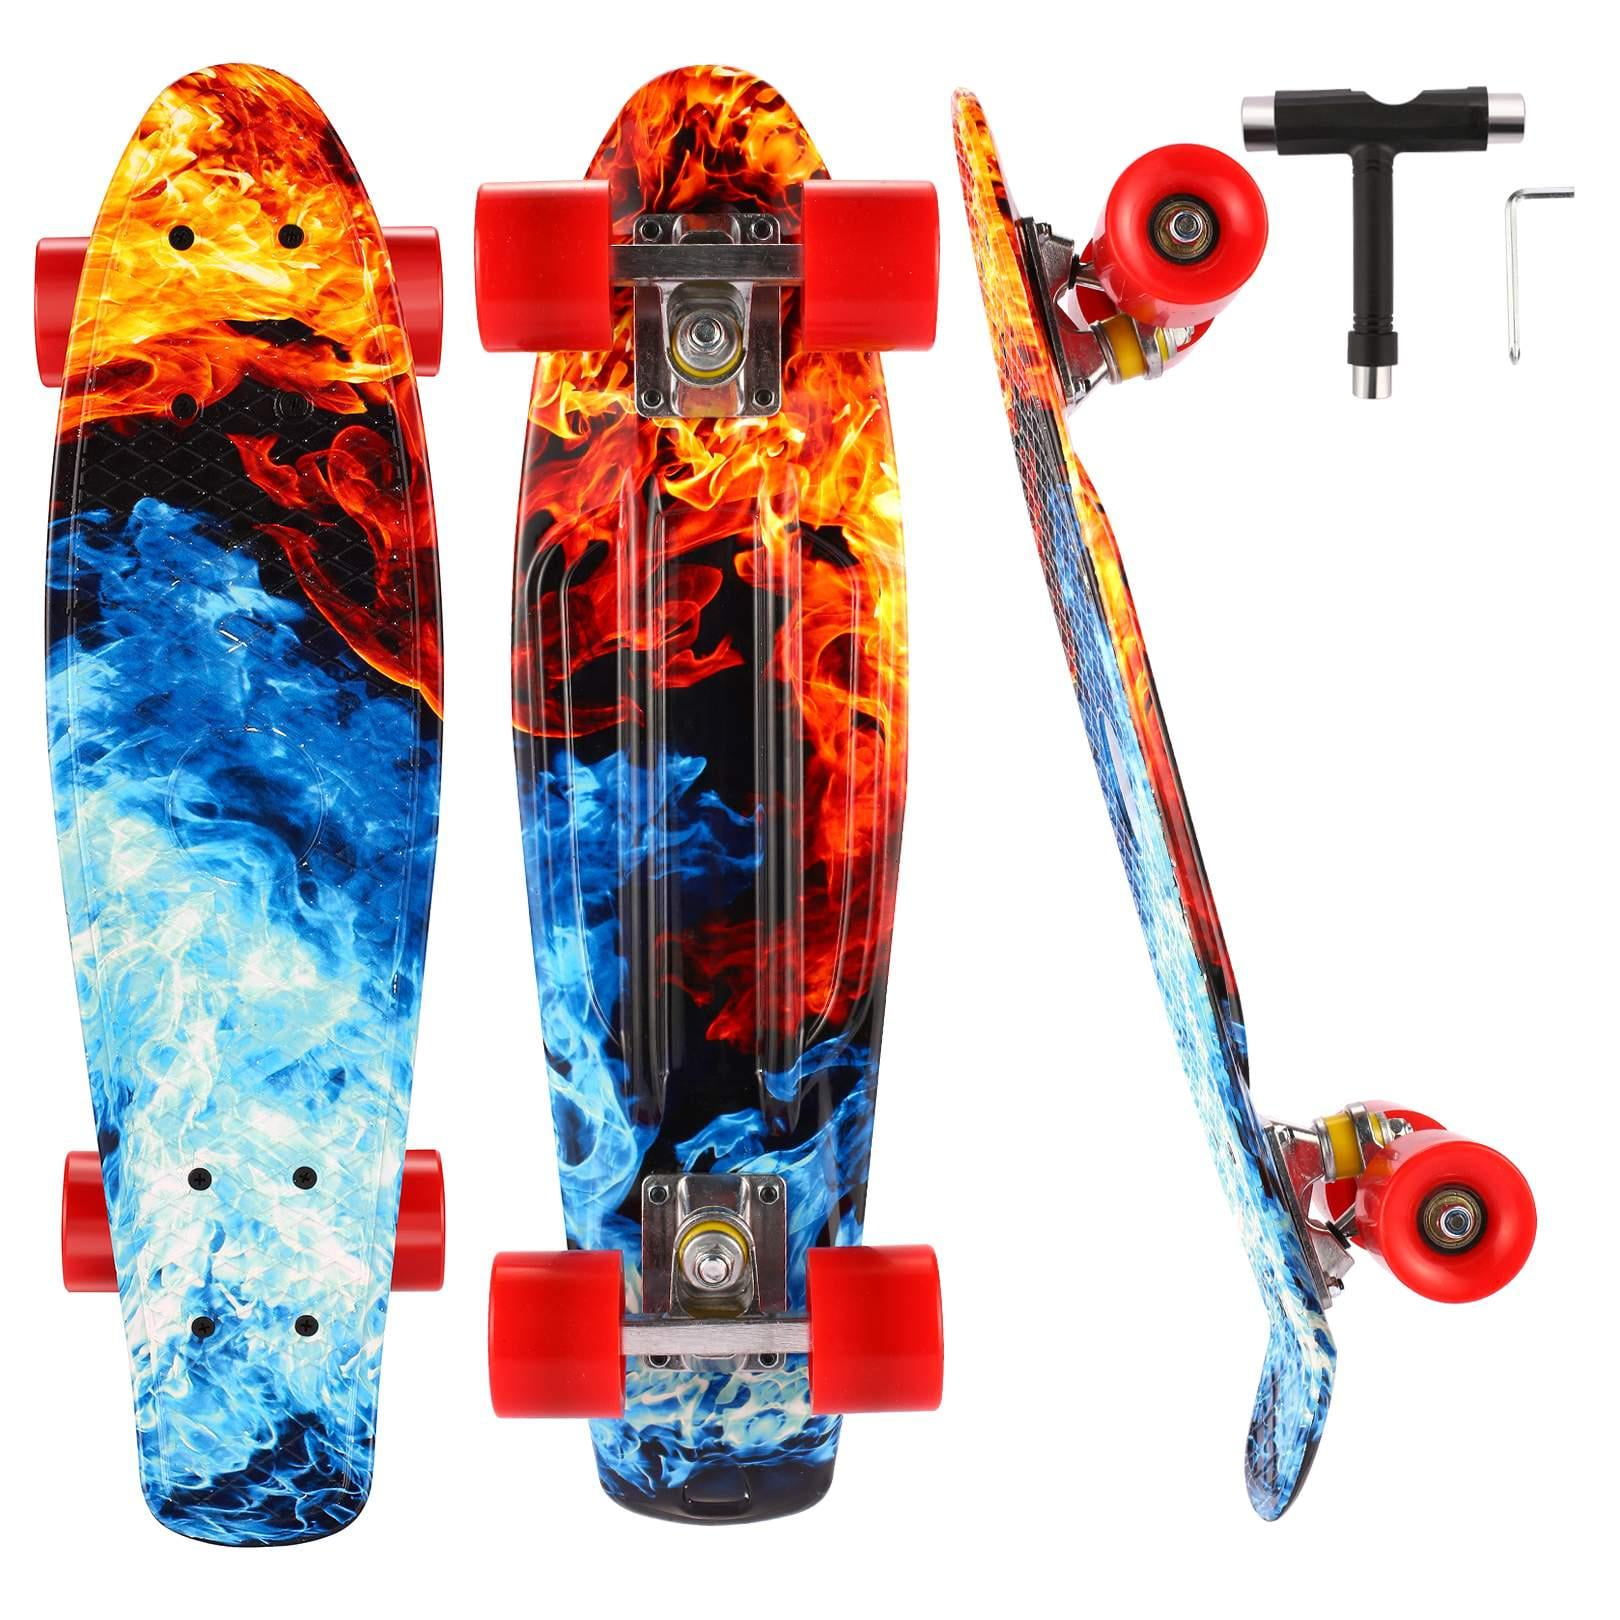 22 Inch Complete Mini Cruiser Skateboard with LED Light Up Wheels for Kids Girls Boys Caroma Skateboards for Teens Beginners